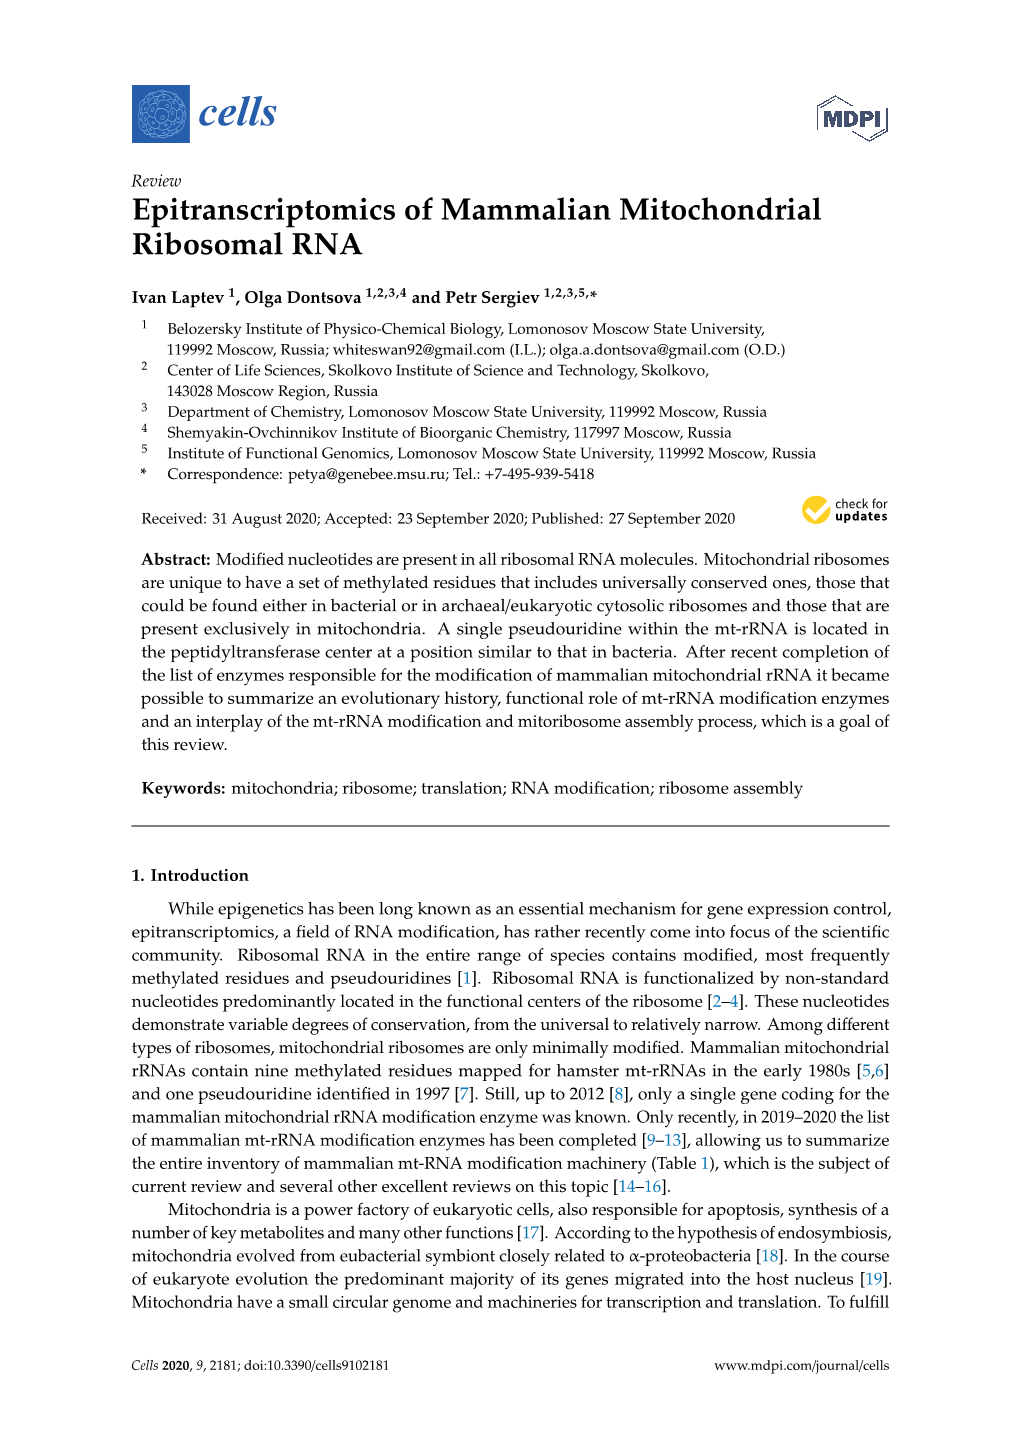 Epitranscriptomics of Mammalian Mitochondrial Ribosomal RNA